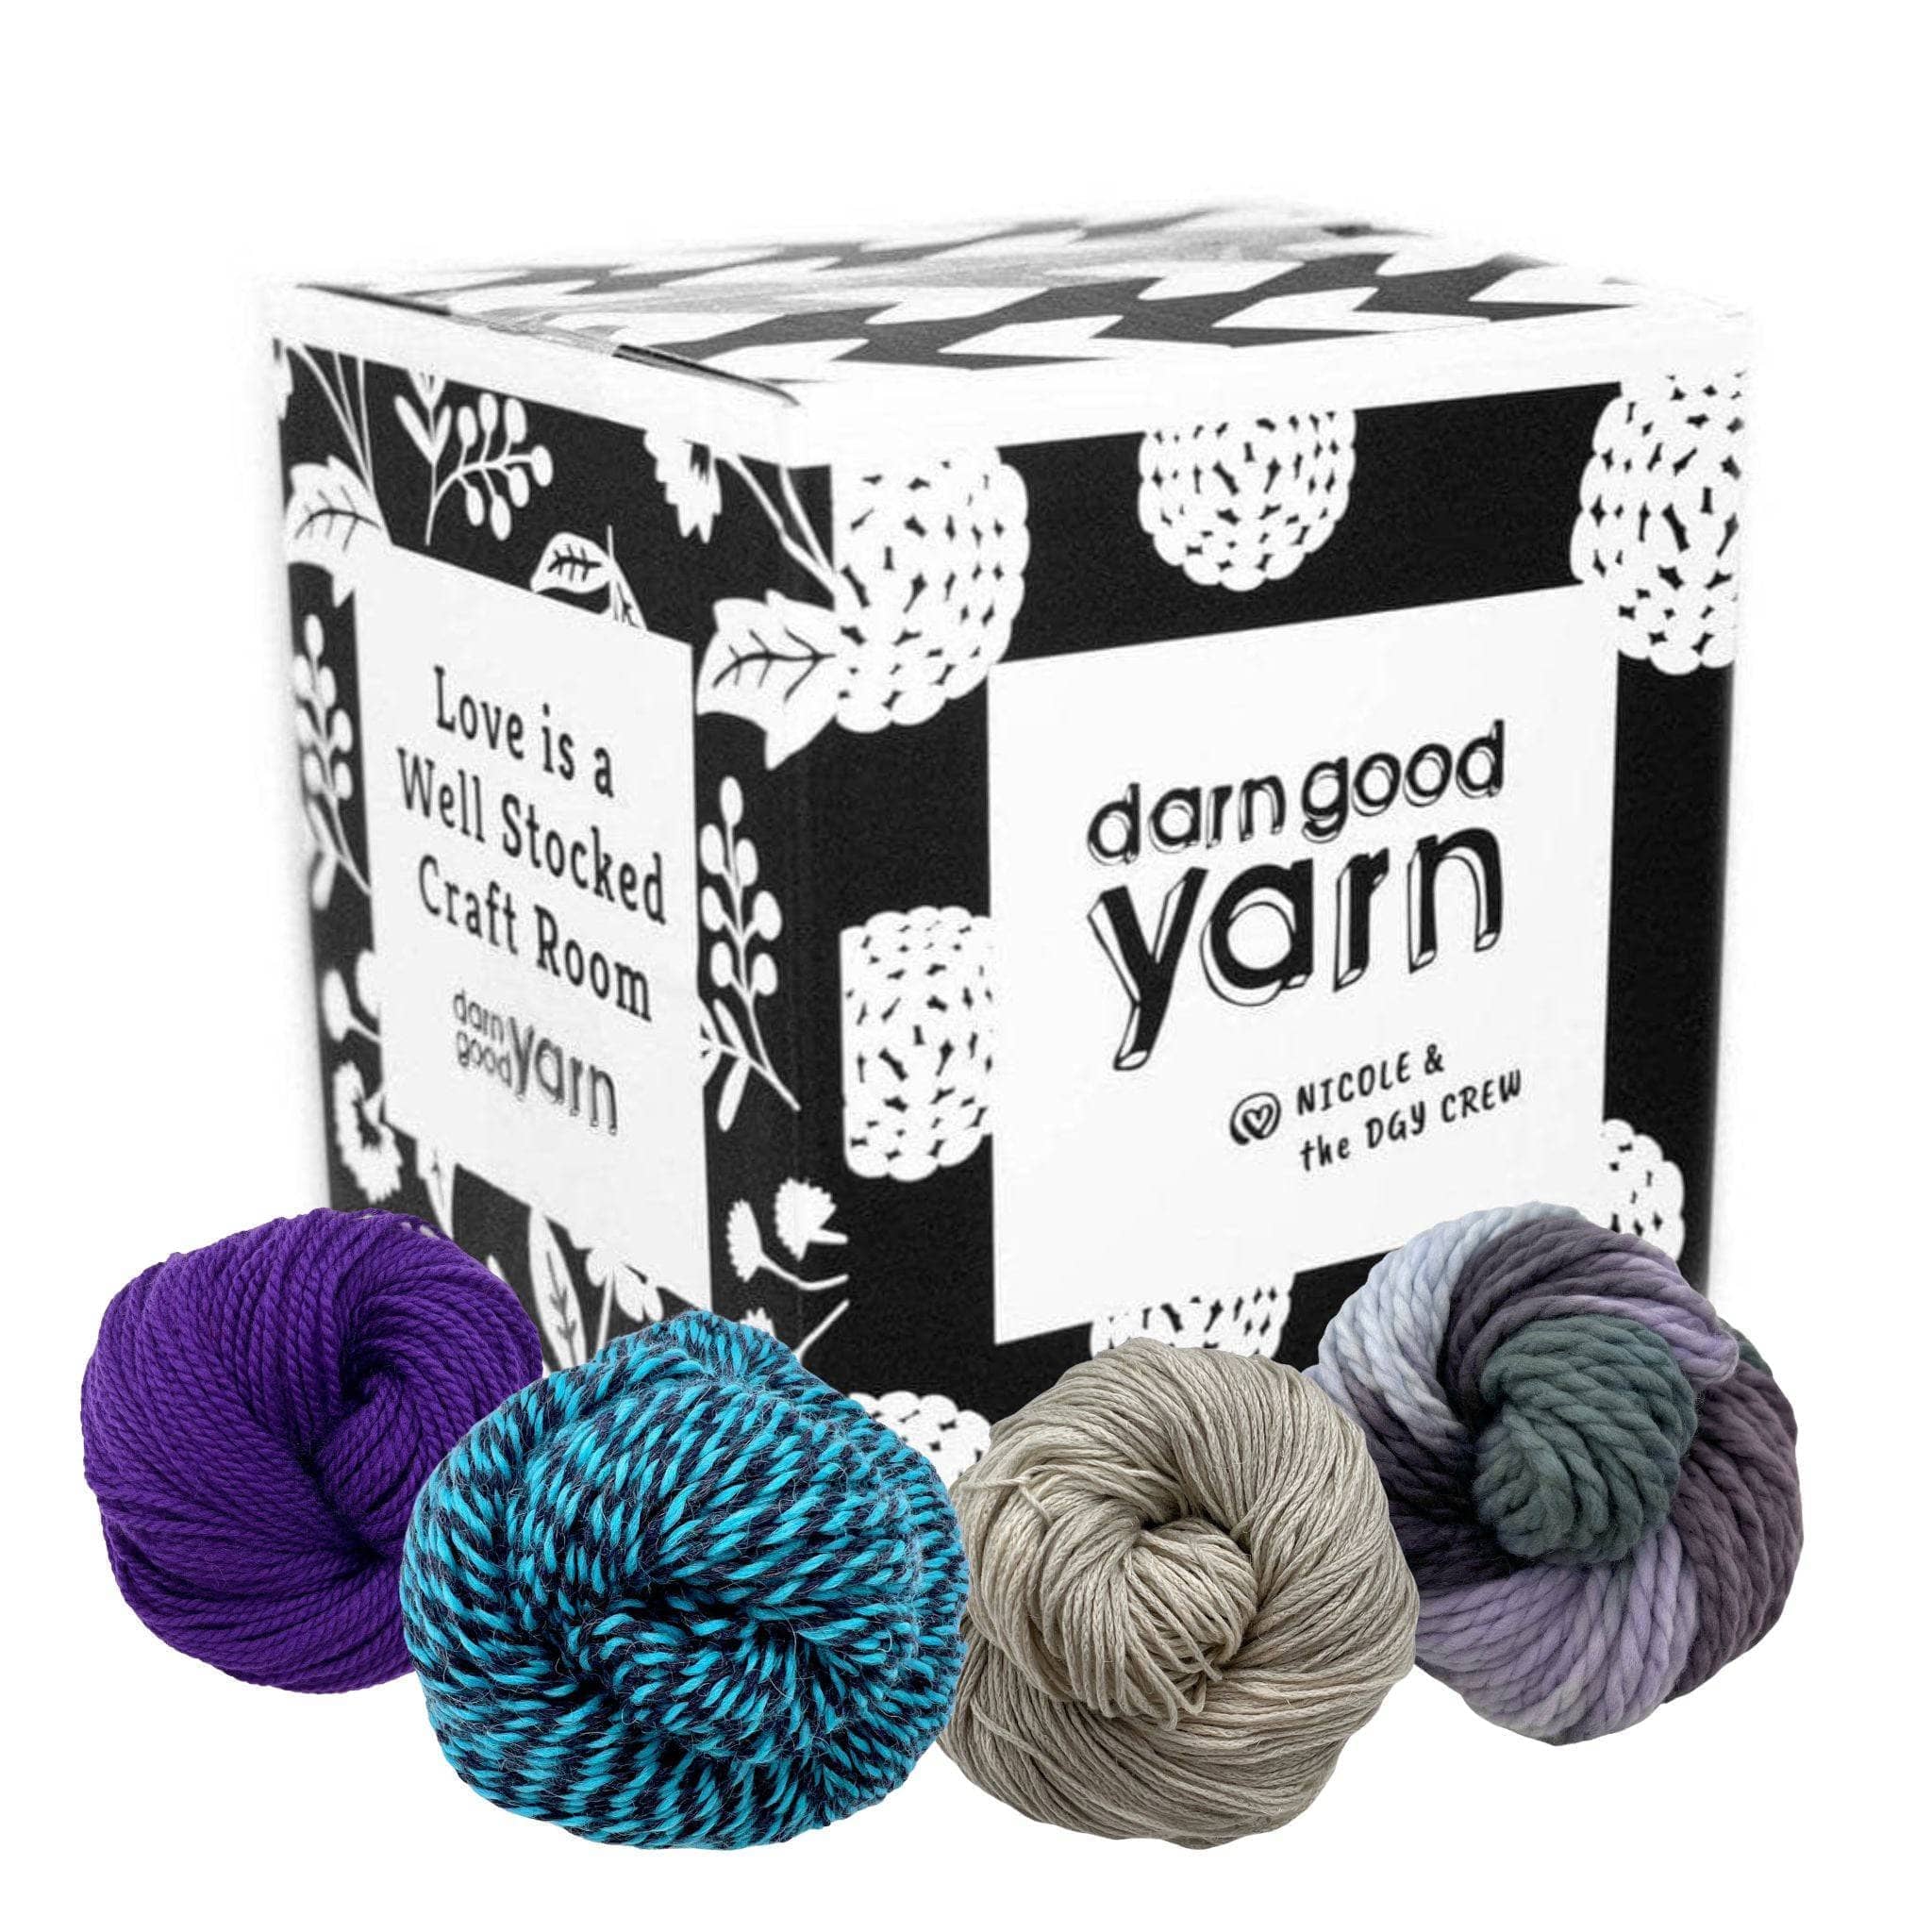 The Darn Good Yarn Sale Bin - Craft Supplies, Clothing, & More